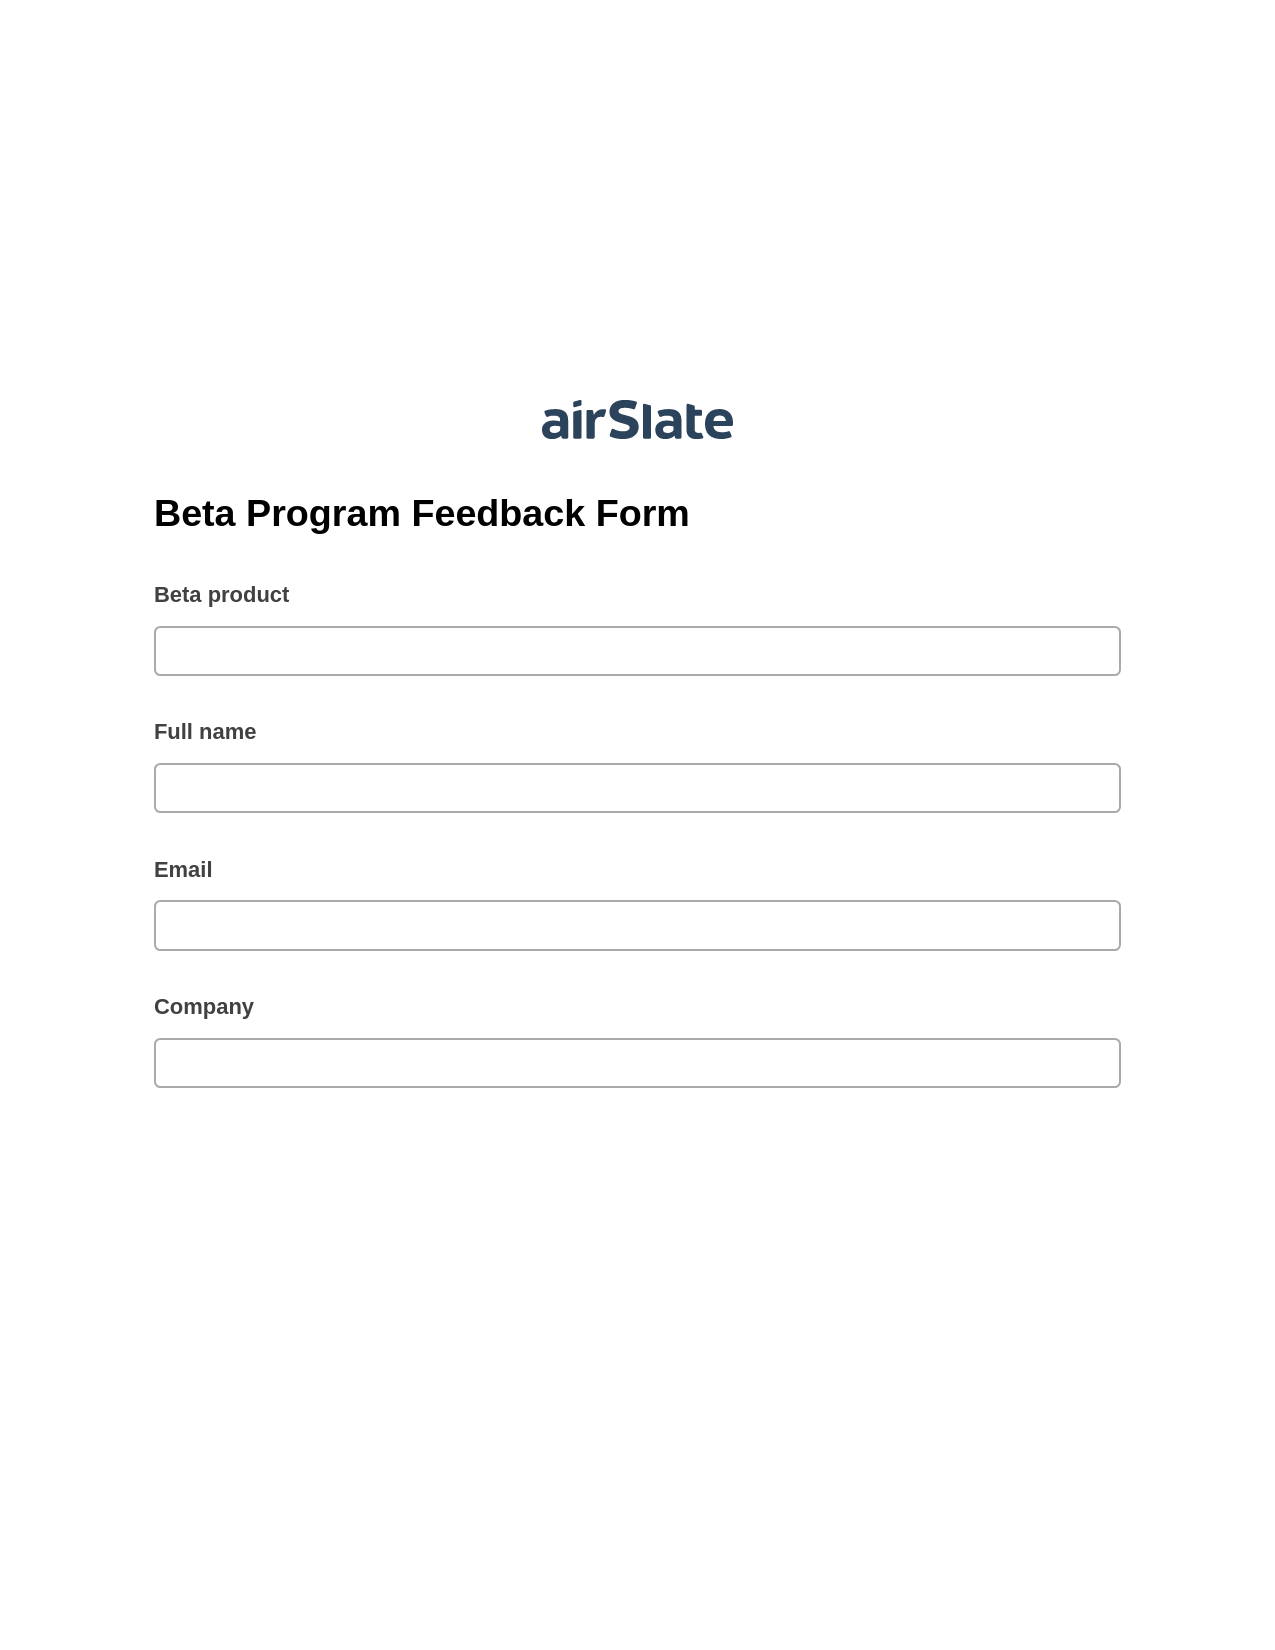 Beta Program Feedback Form Pre-fill from Google Sheets Bot, Remove Slate Bot, Post-finish Document Bot